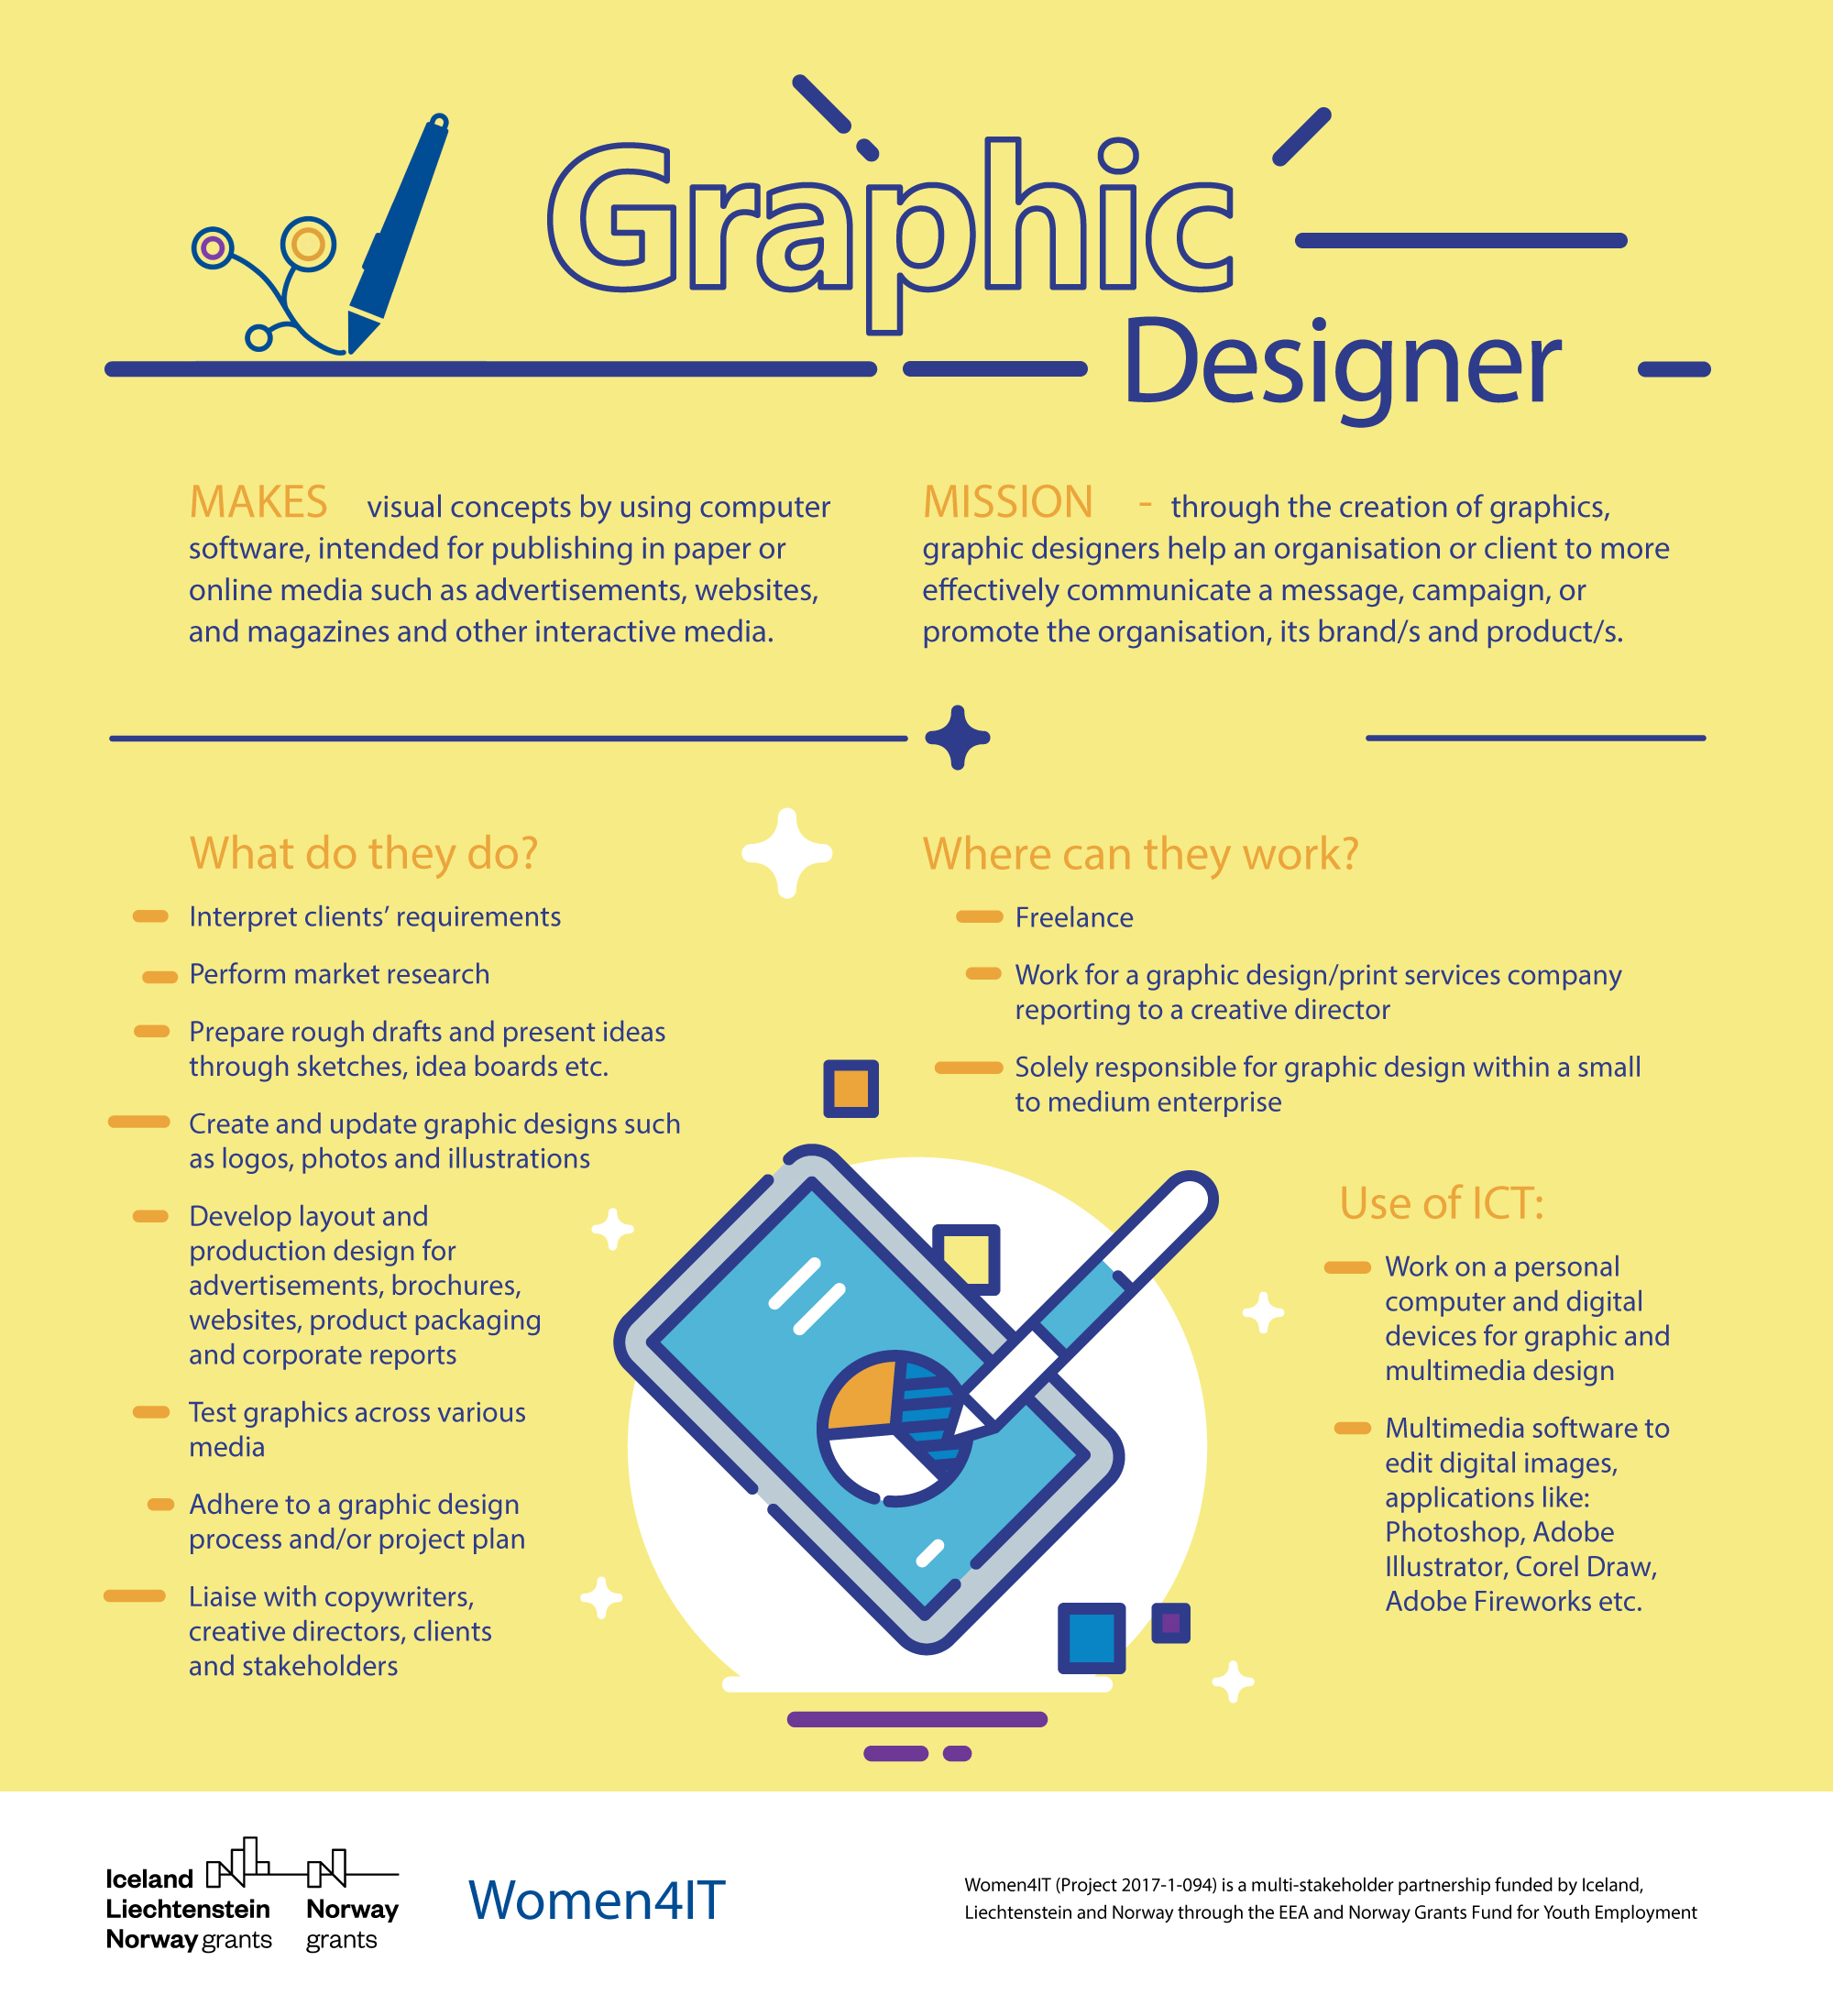 Jobs of graphic design nj local government jobs